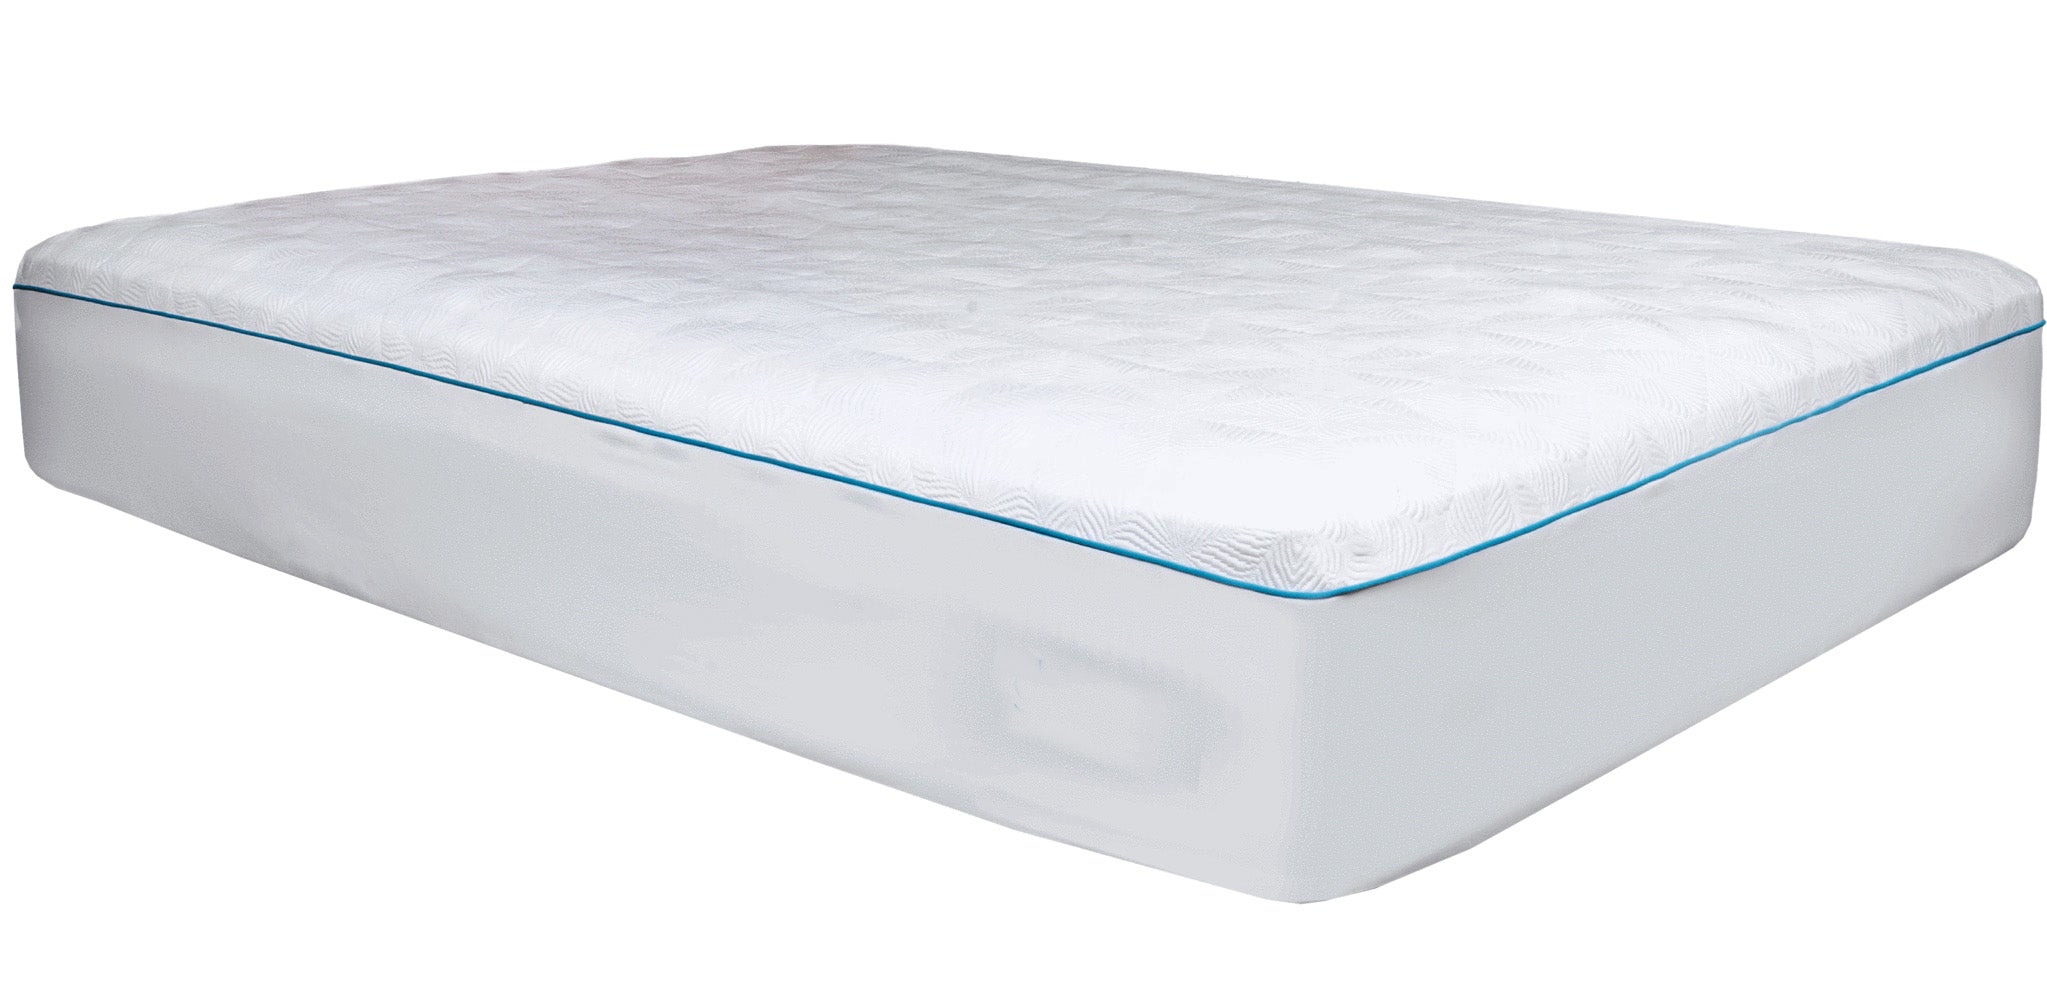 ice cold mattress pad